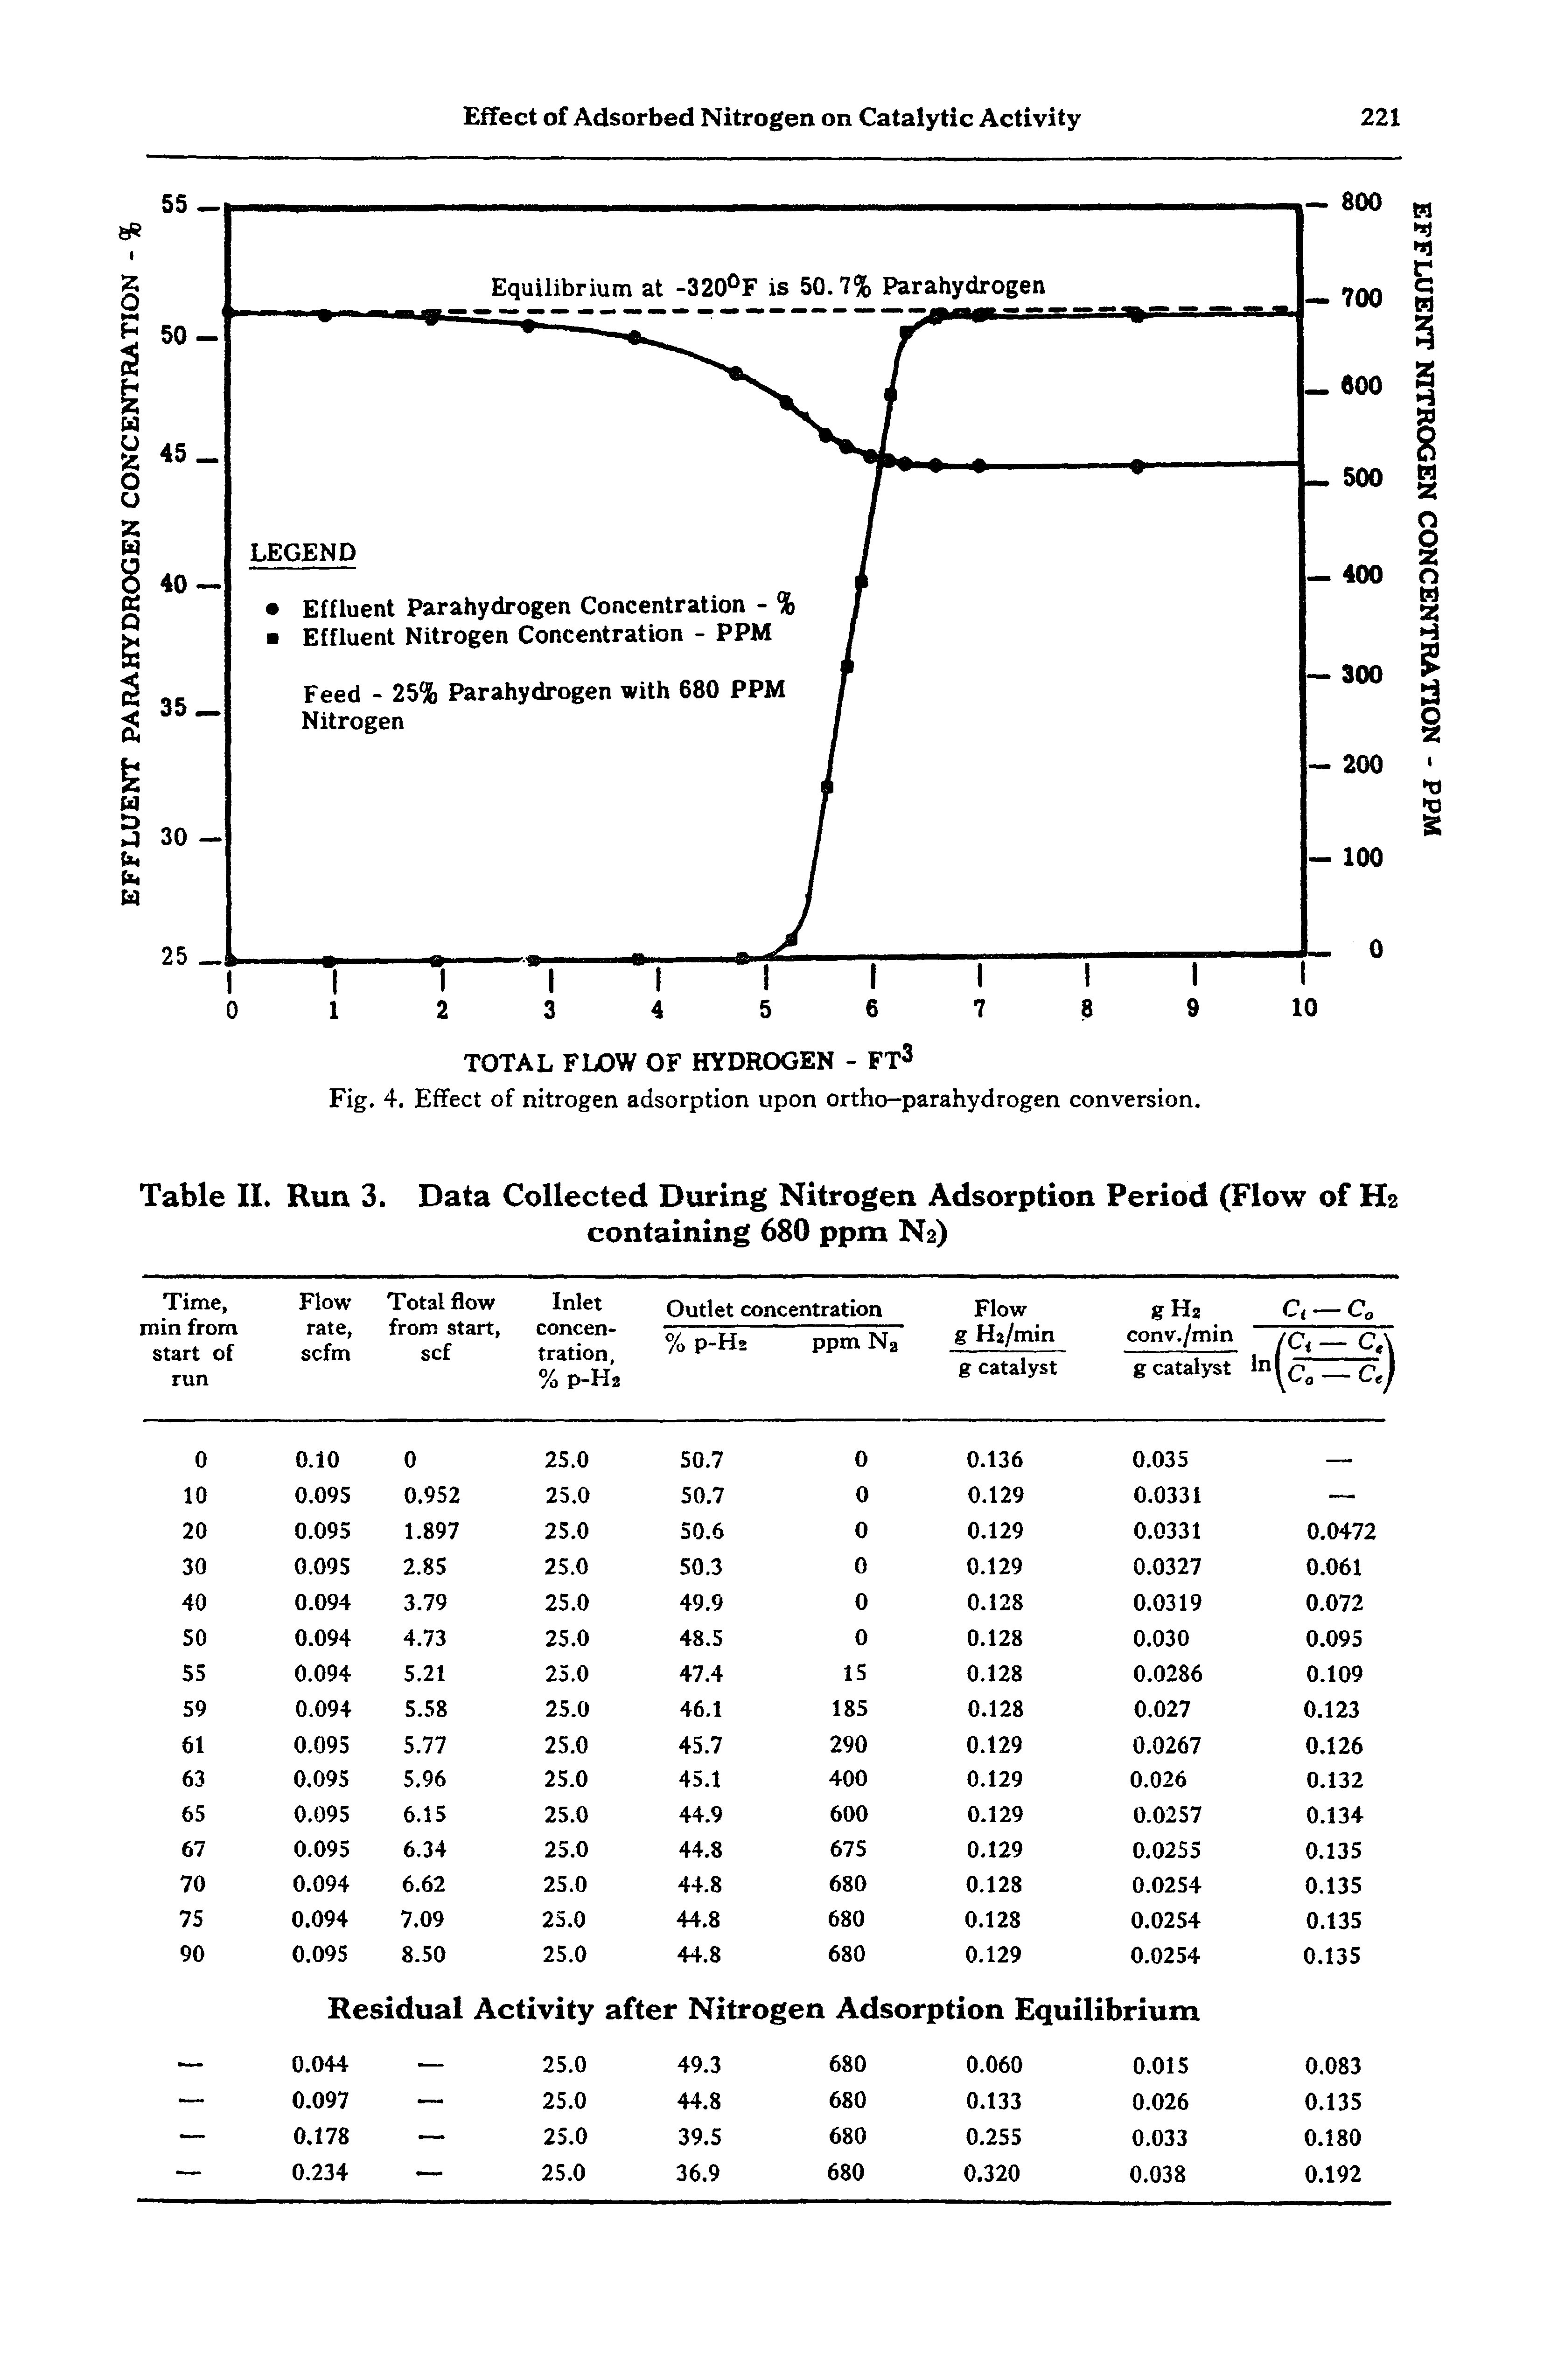 Fig. 4. Effect of nitrogen adsorption upon ortho-parahydrogen conversion.